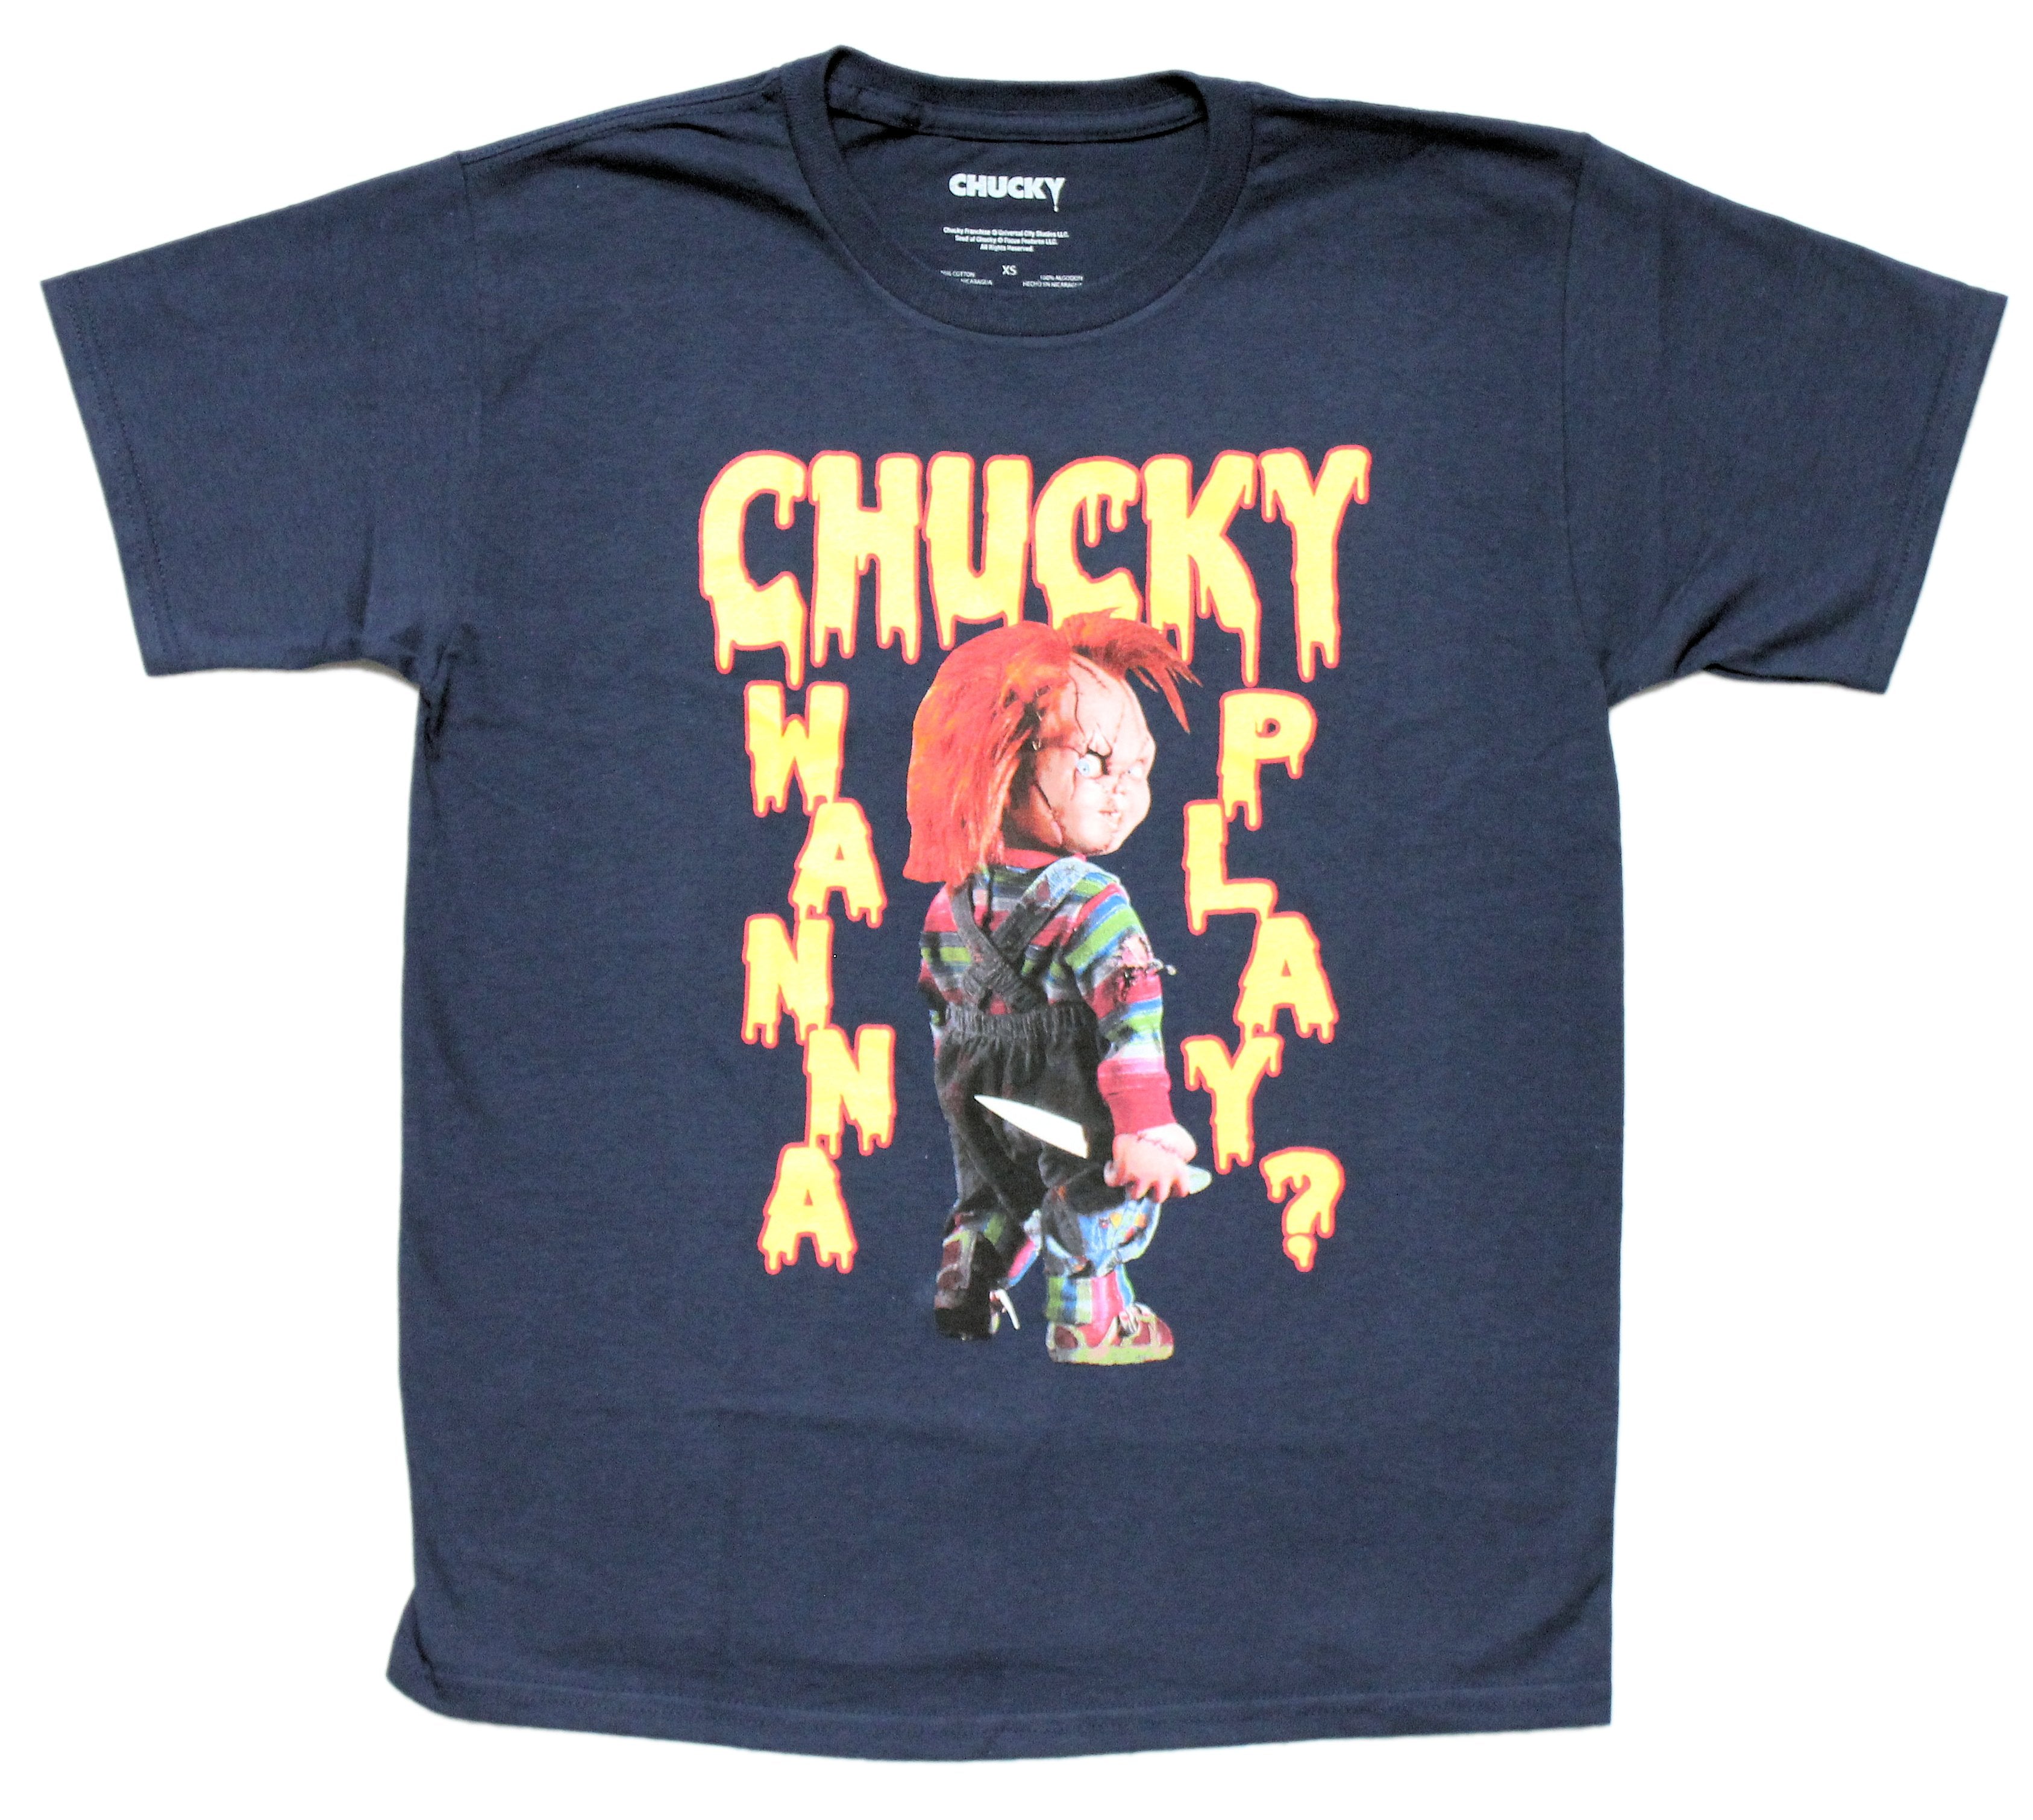 Childs Play Mens T-Shirt - Chucky Holding Knife - Wanna Play?